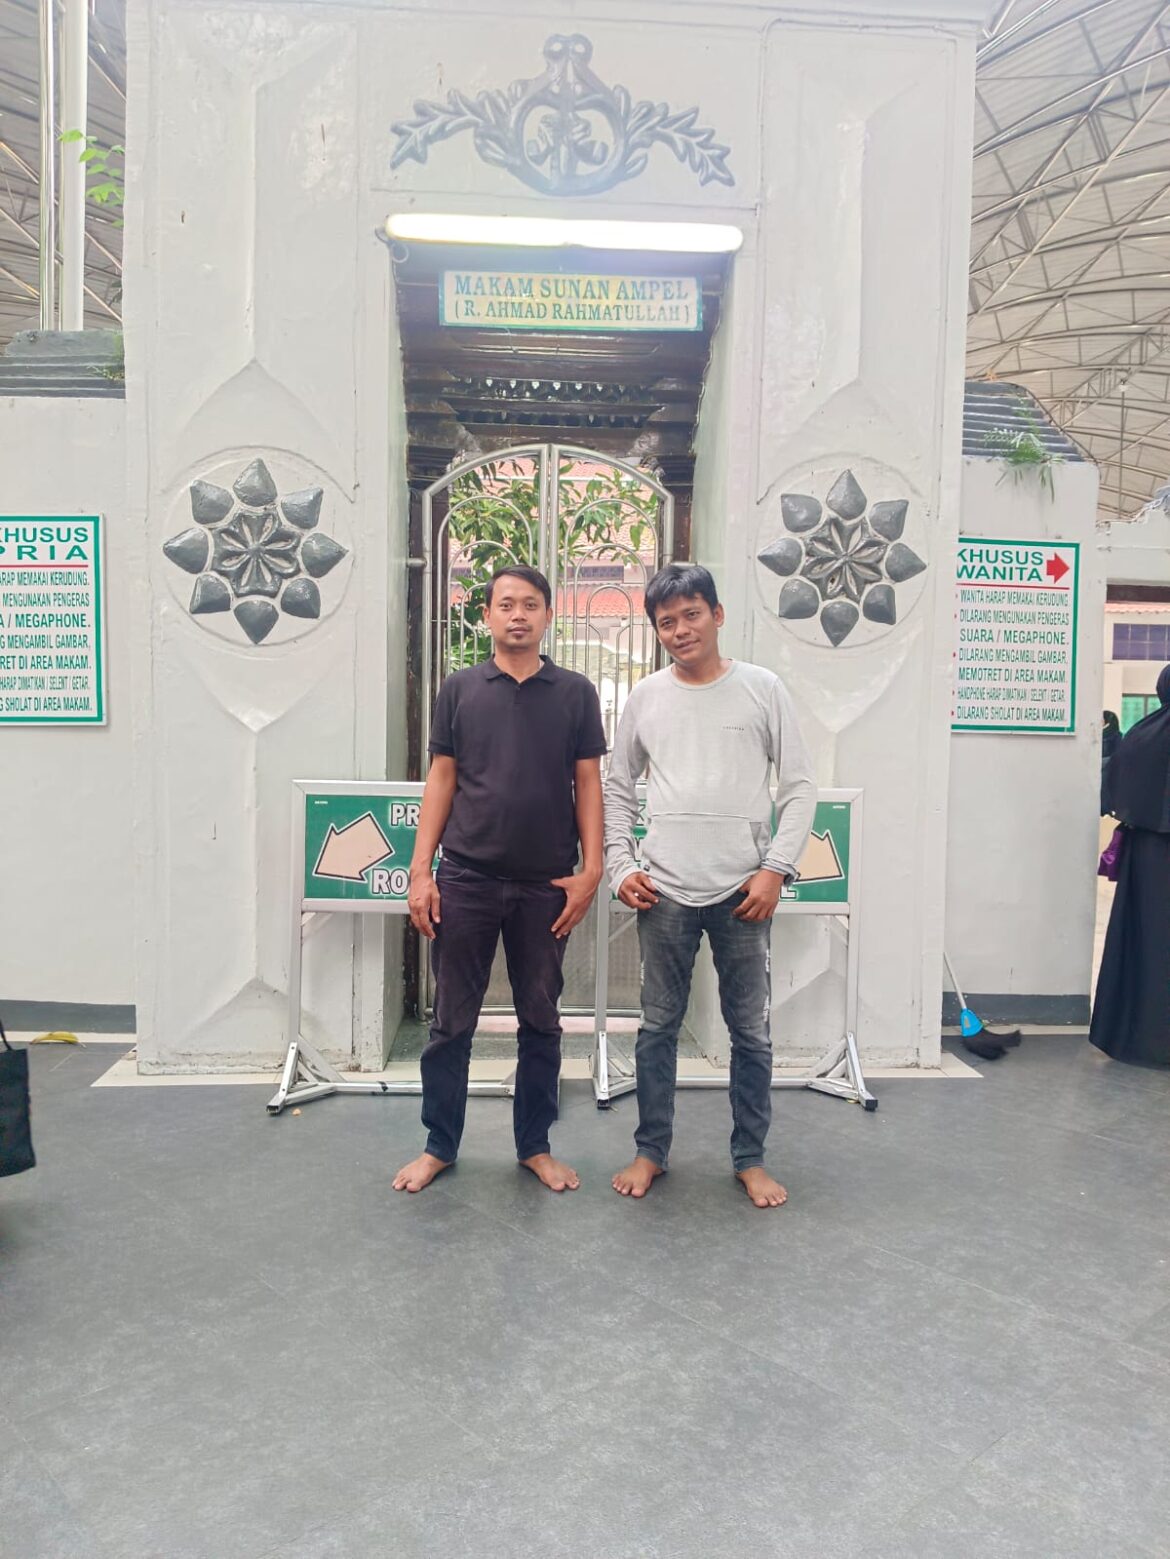 Pimpinan Redaksi Media Online Penahitam Bersama Tiem, Adakan Tour Wisata Religi Ziarah ke Makam Sunan Ampel Surabaya Jawa Timur